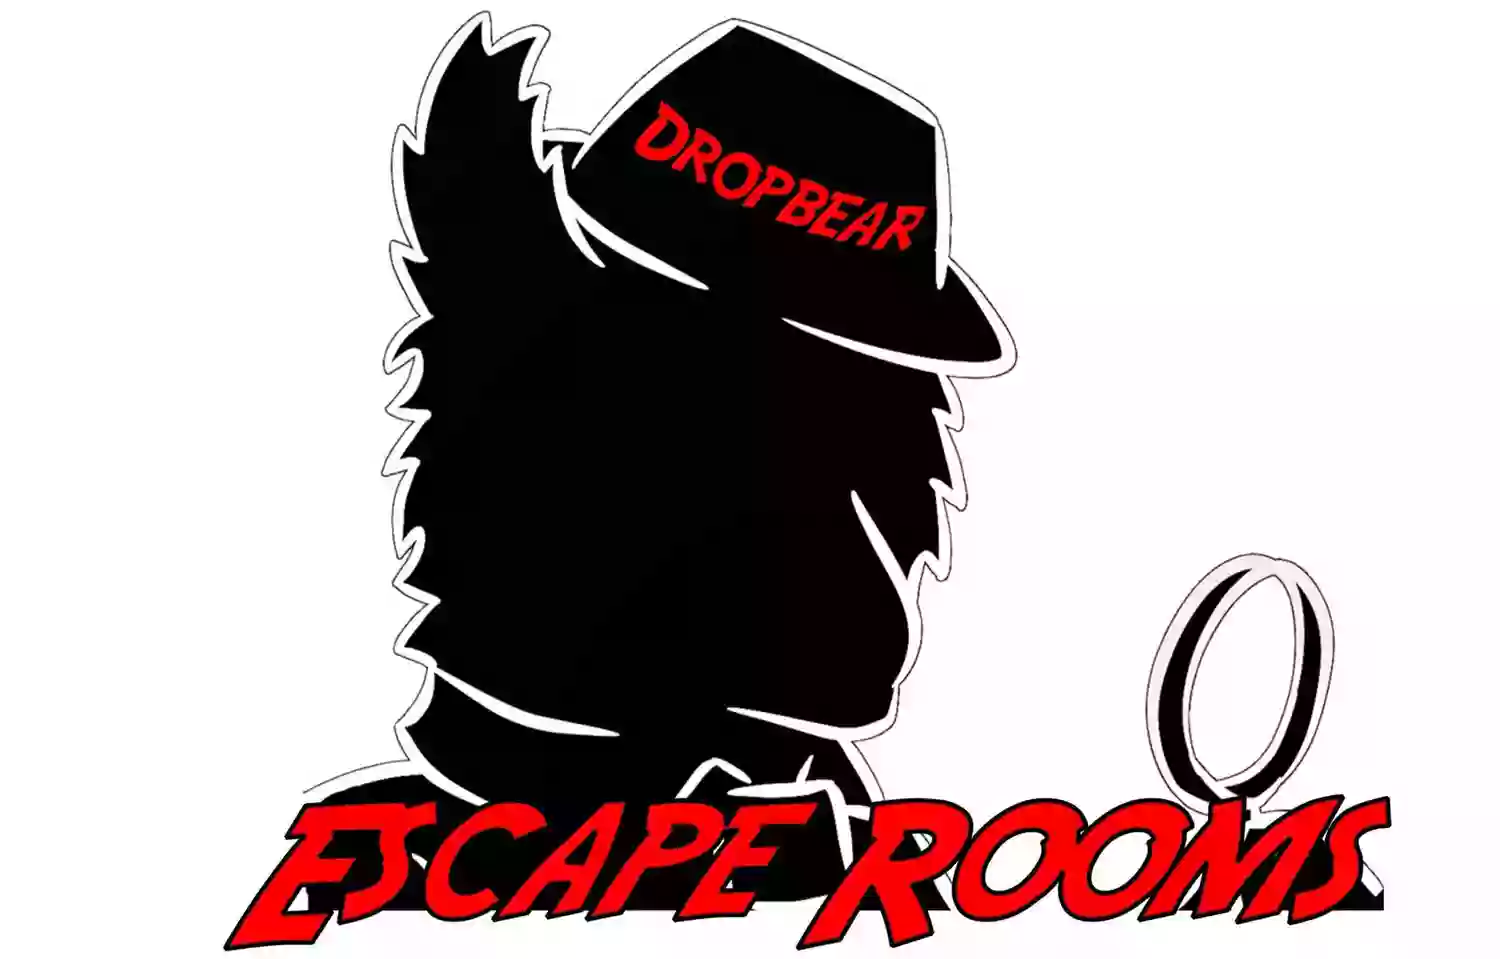 Dropbear Escape Rooms